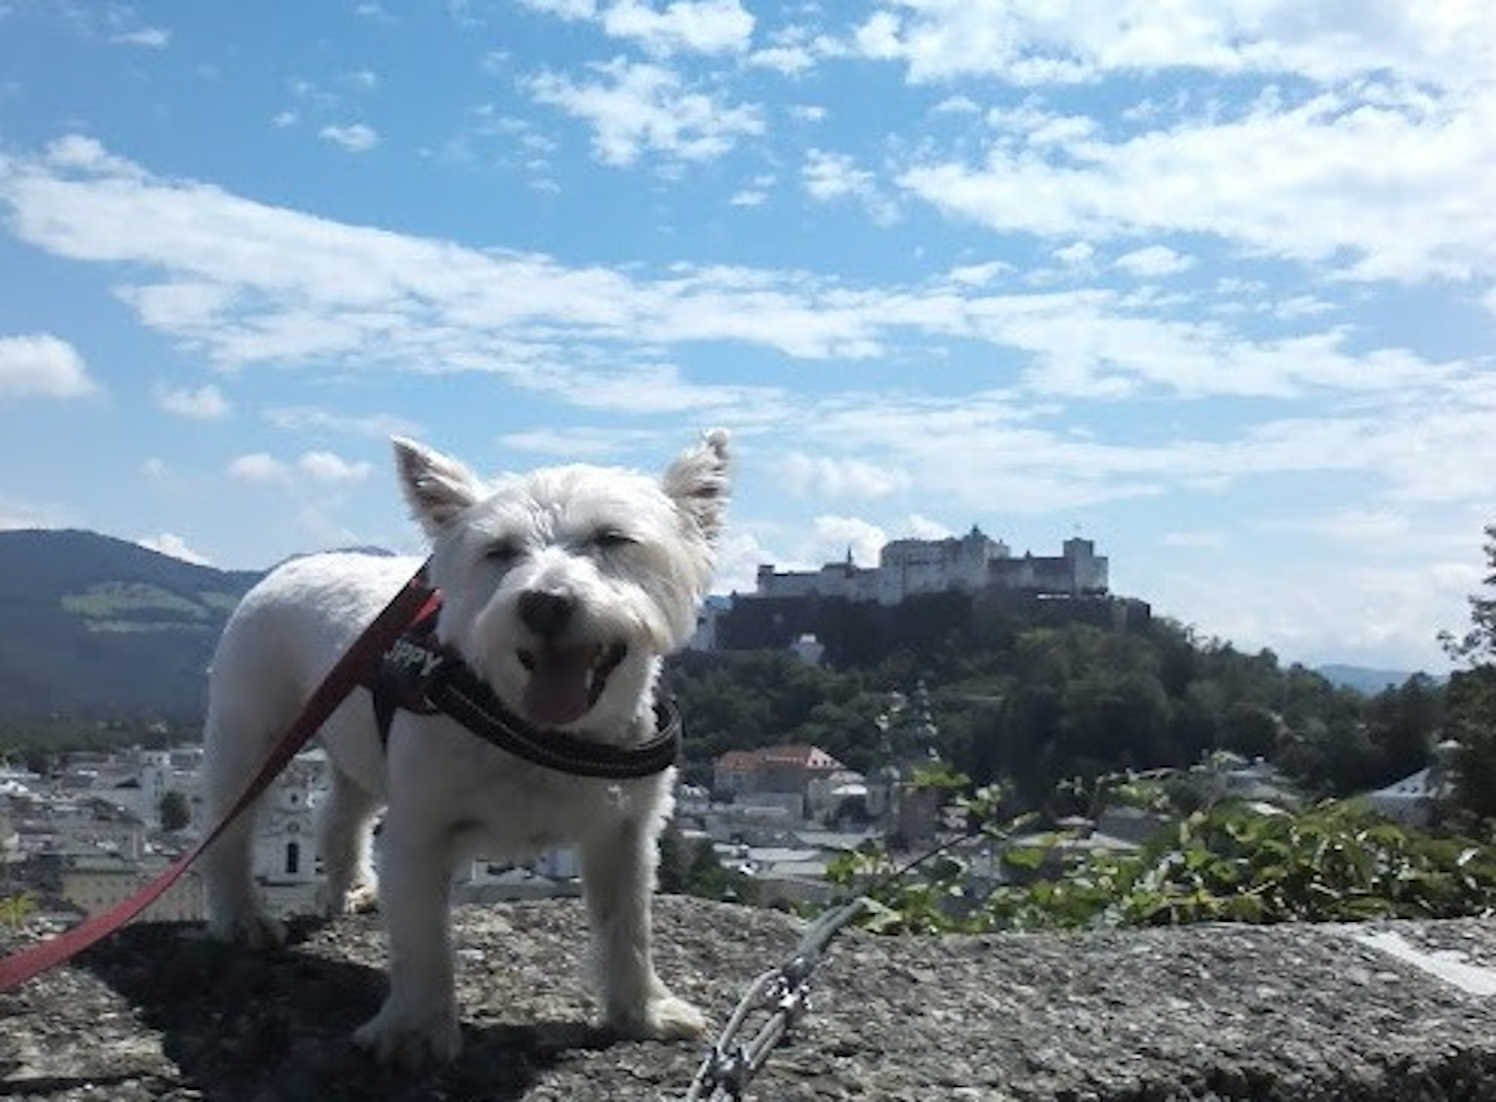 Poppy the westie in Salzburg with castle in background